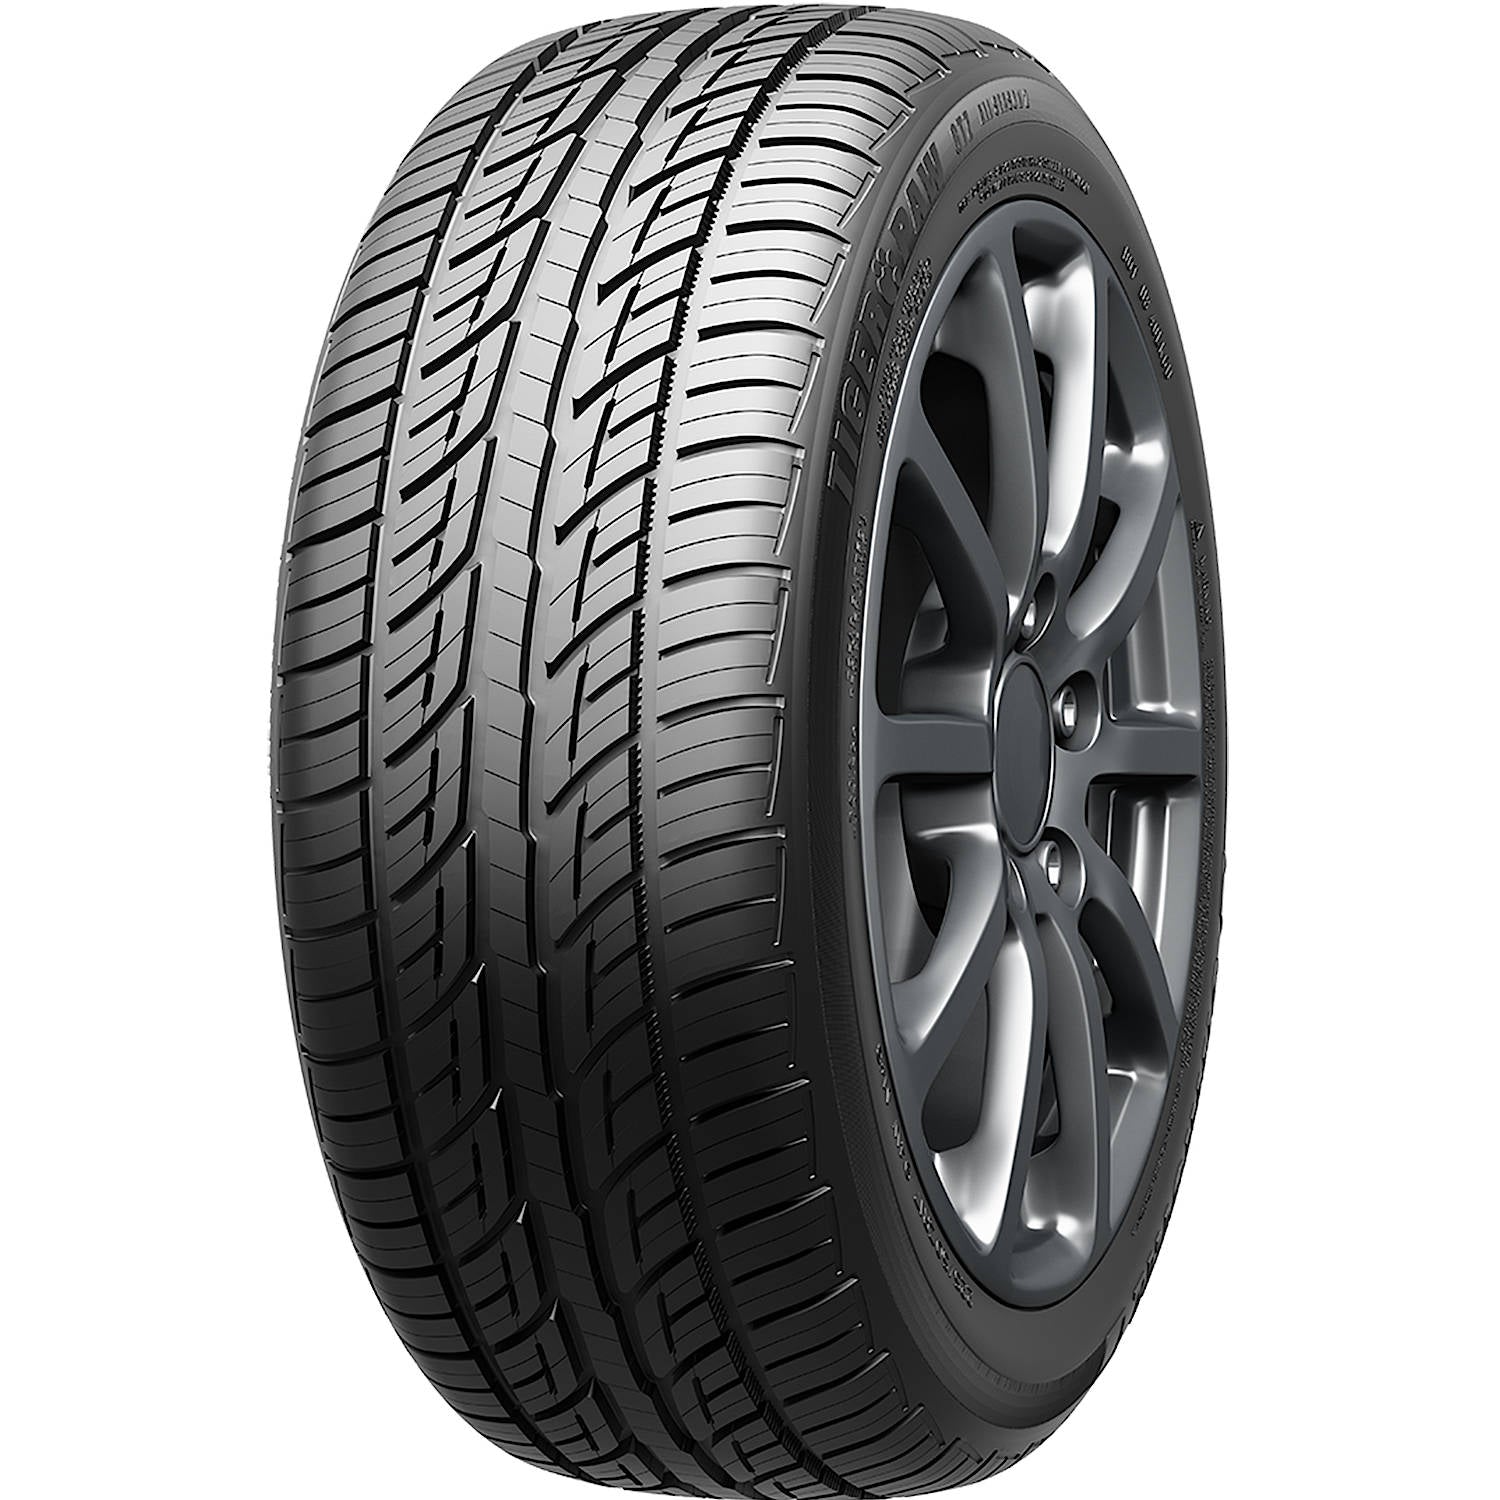 UNIROYAL TIGER PAW GTZ A/S 2 245/35R19 (25.8X9.7R 19) Tires